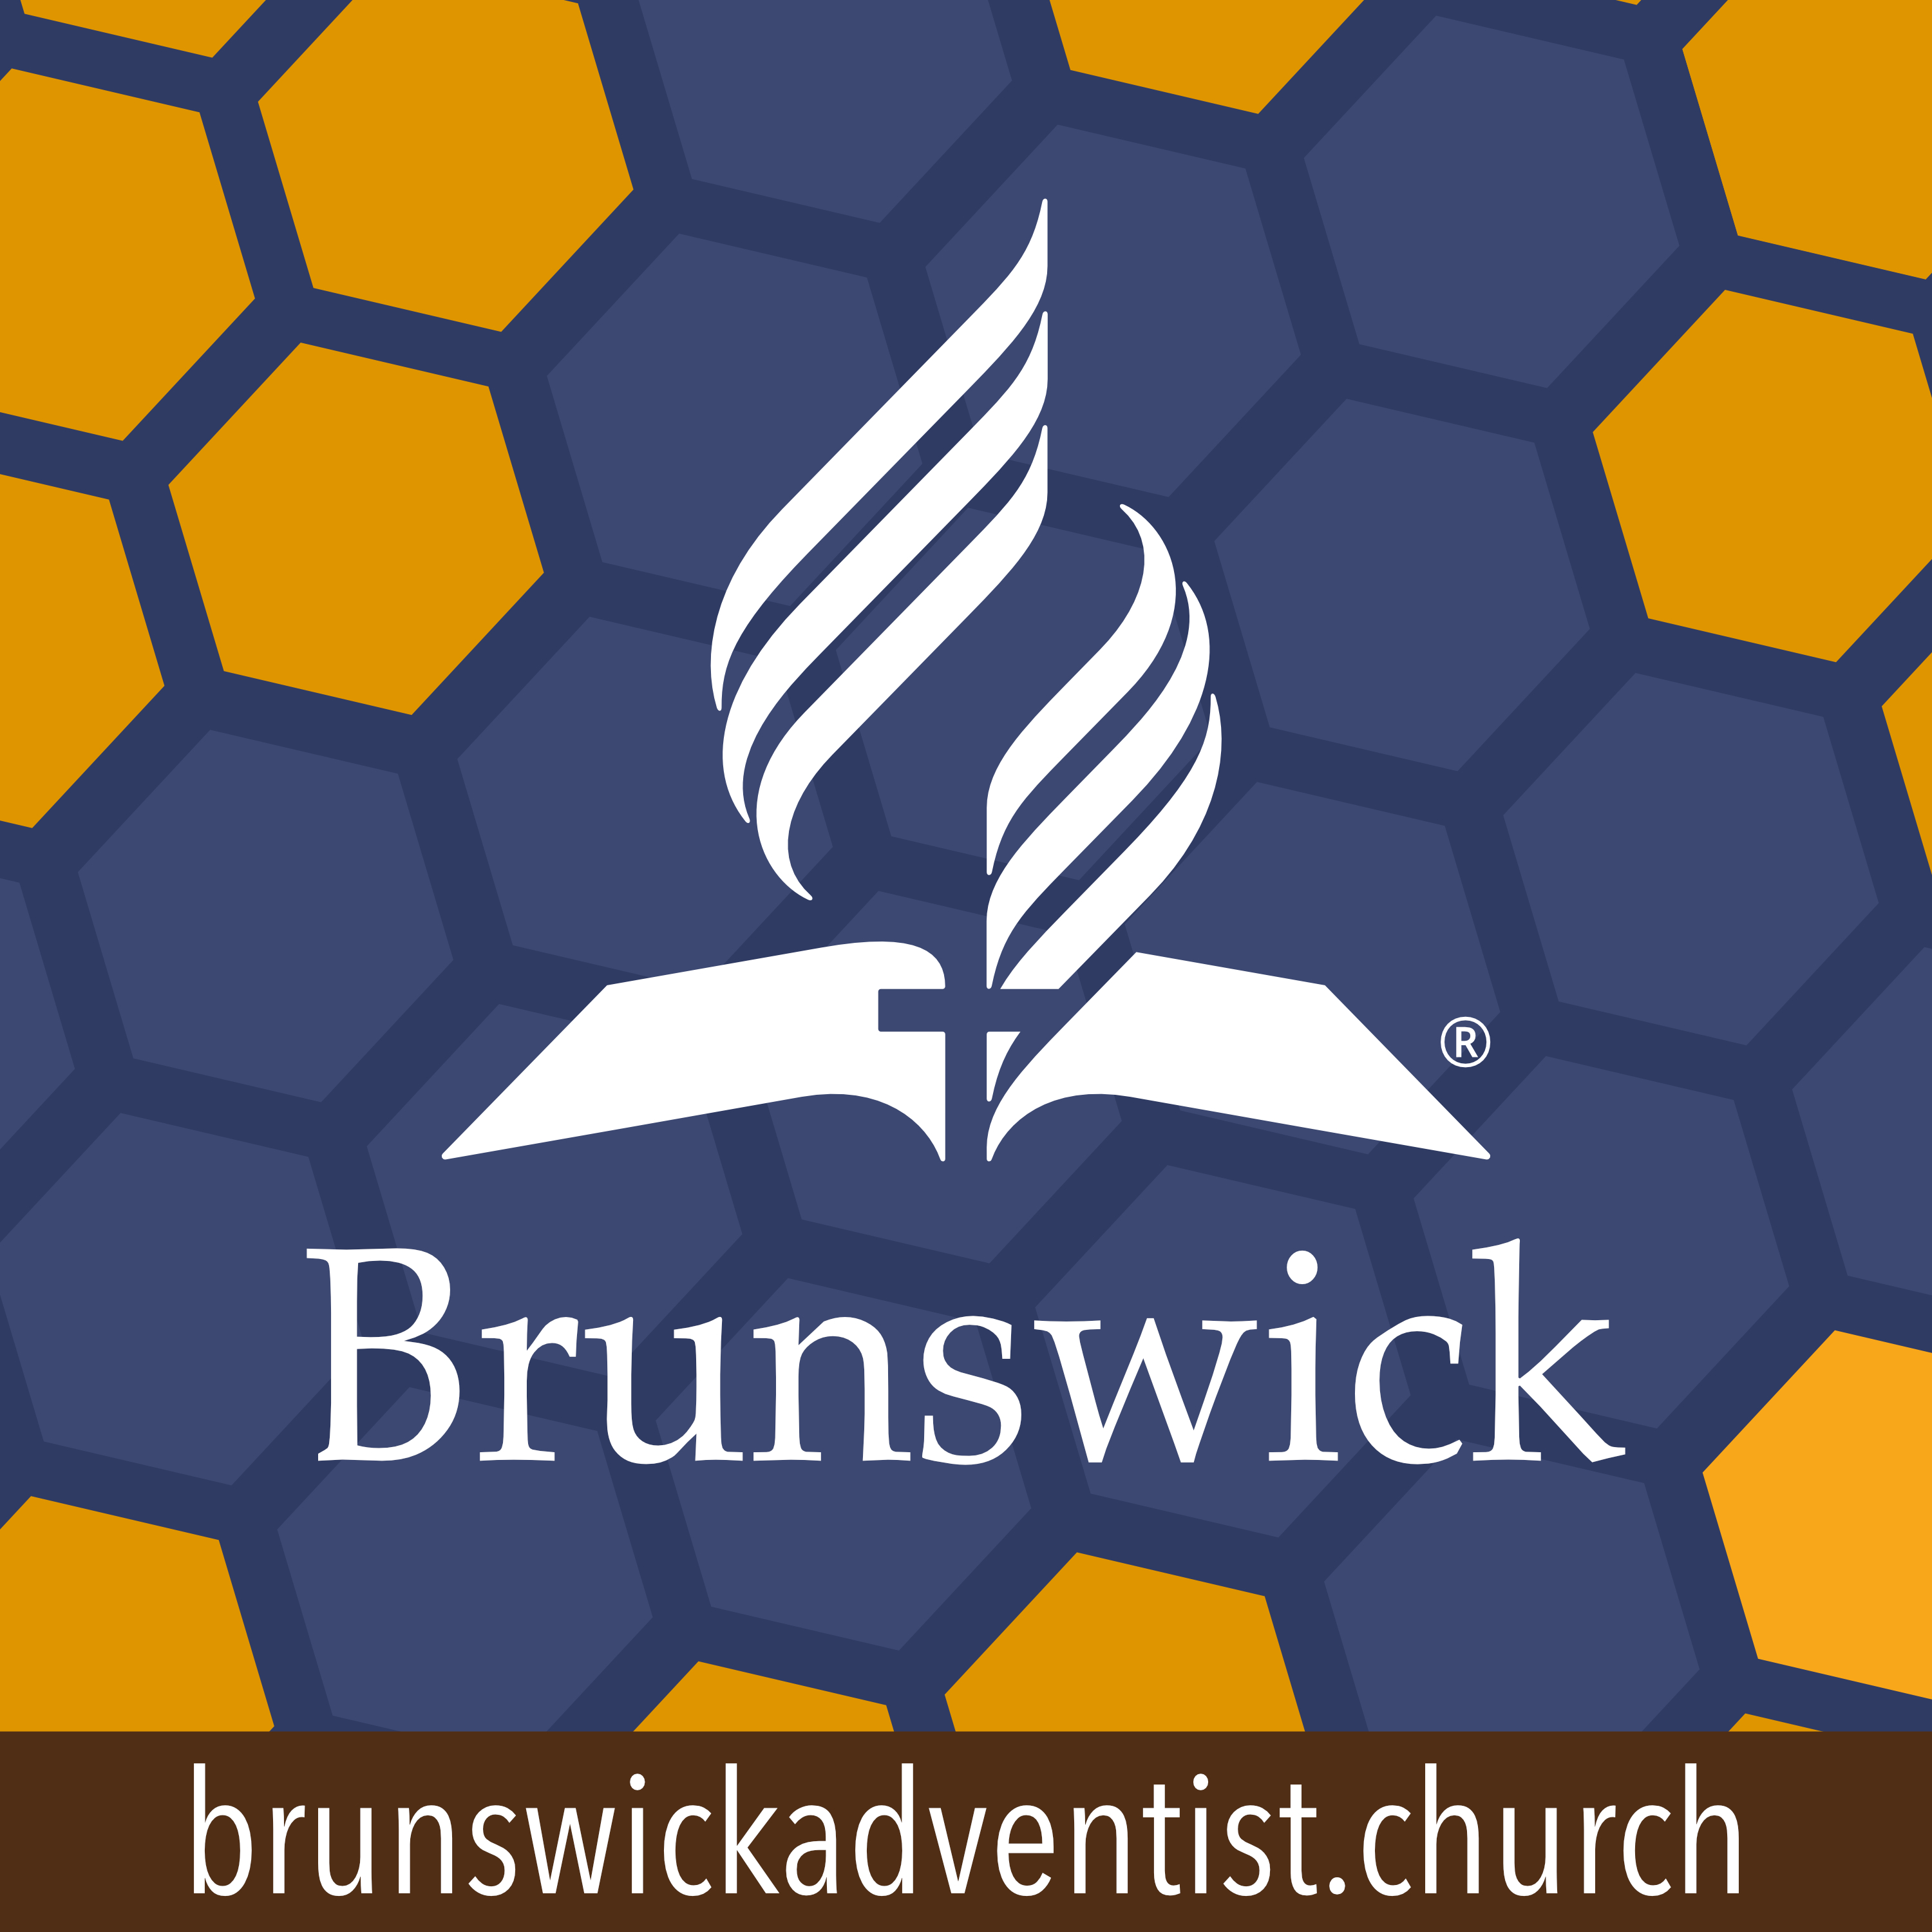 Artwork for Brunswick Seventh-day Adventist Church